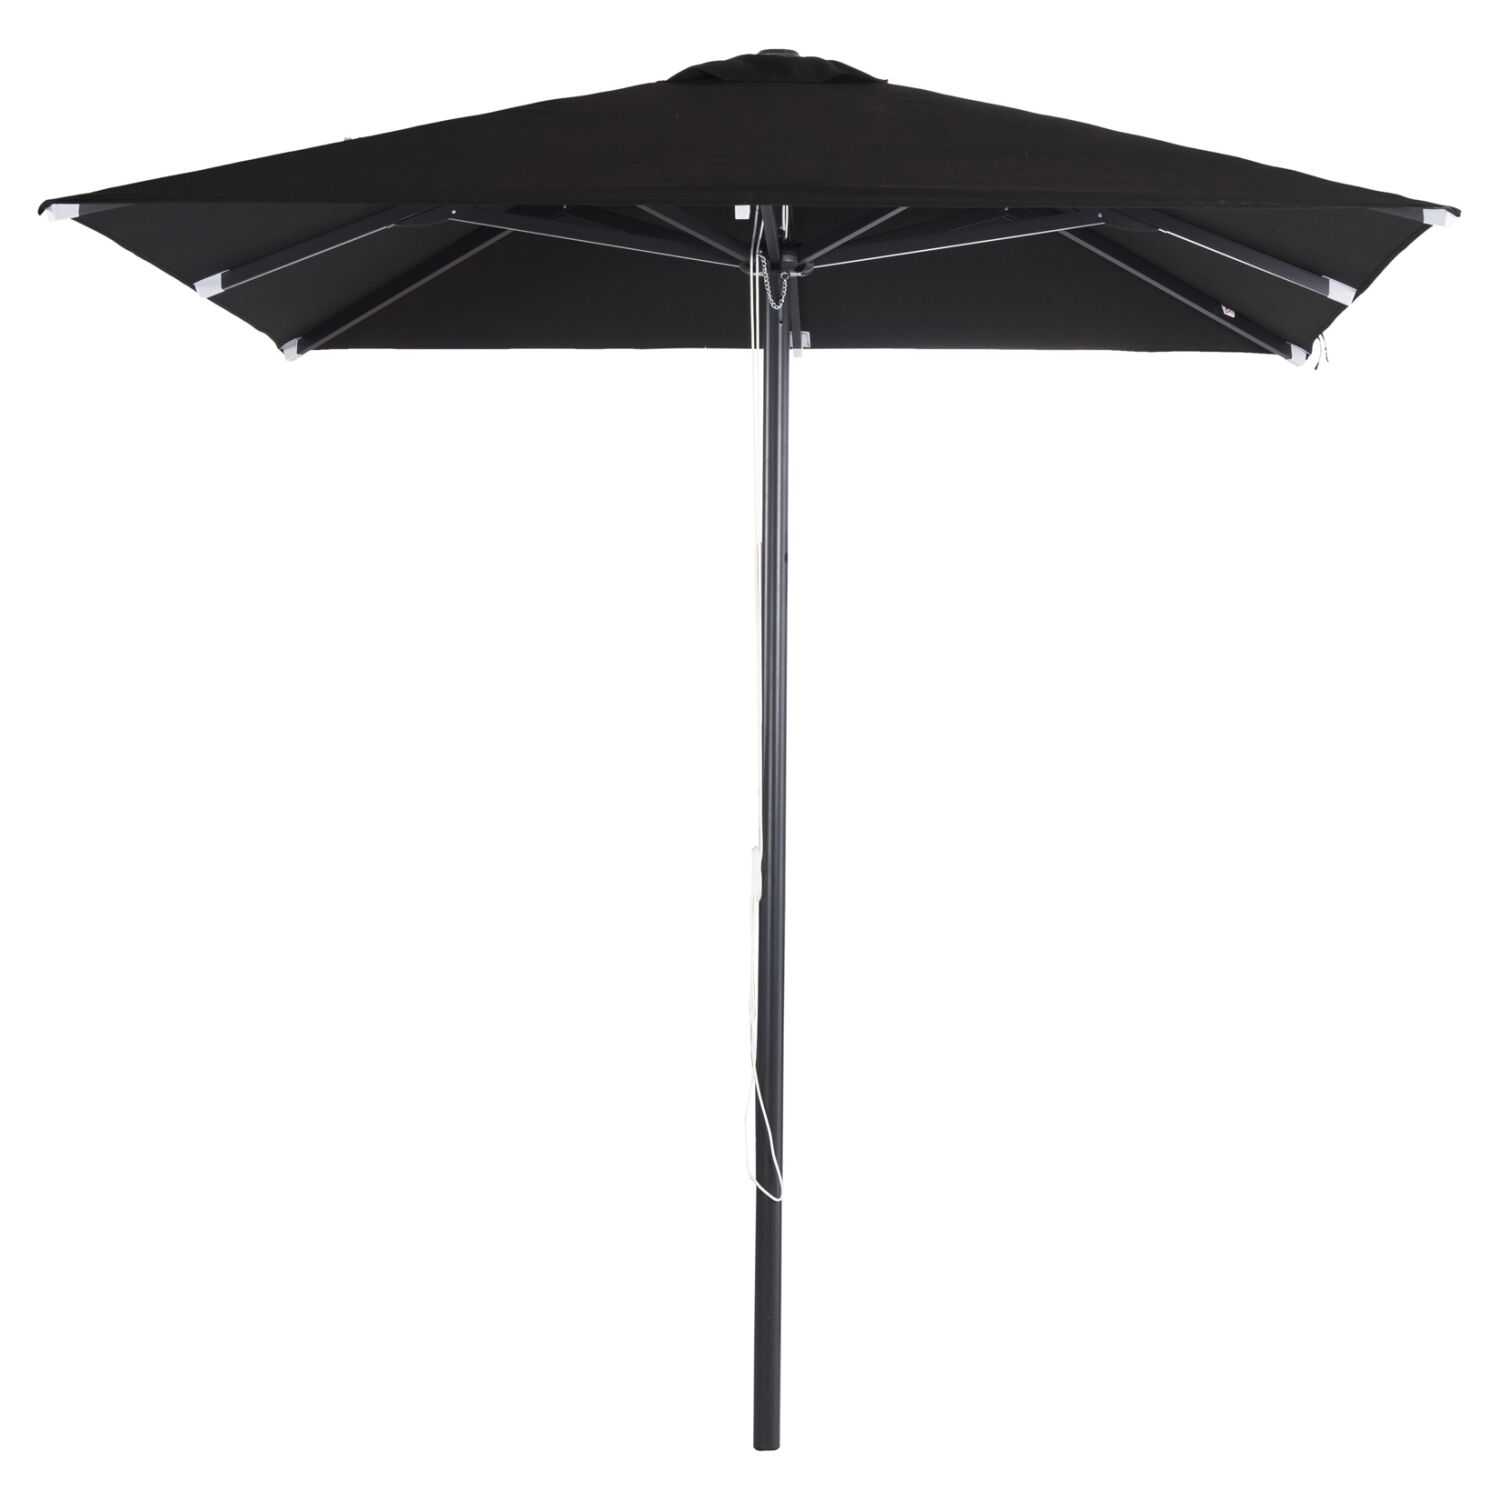 Professional Umbrella ALU 2.20x2.20 Black Fabric Acrylic 8rays HM6013.03